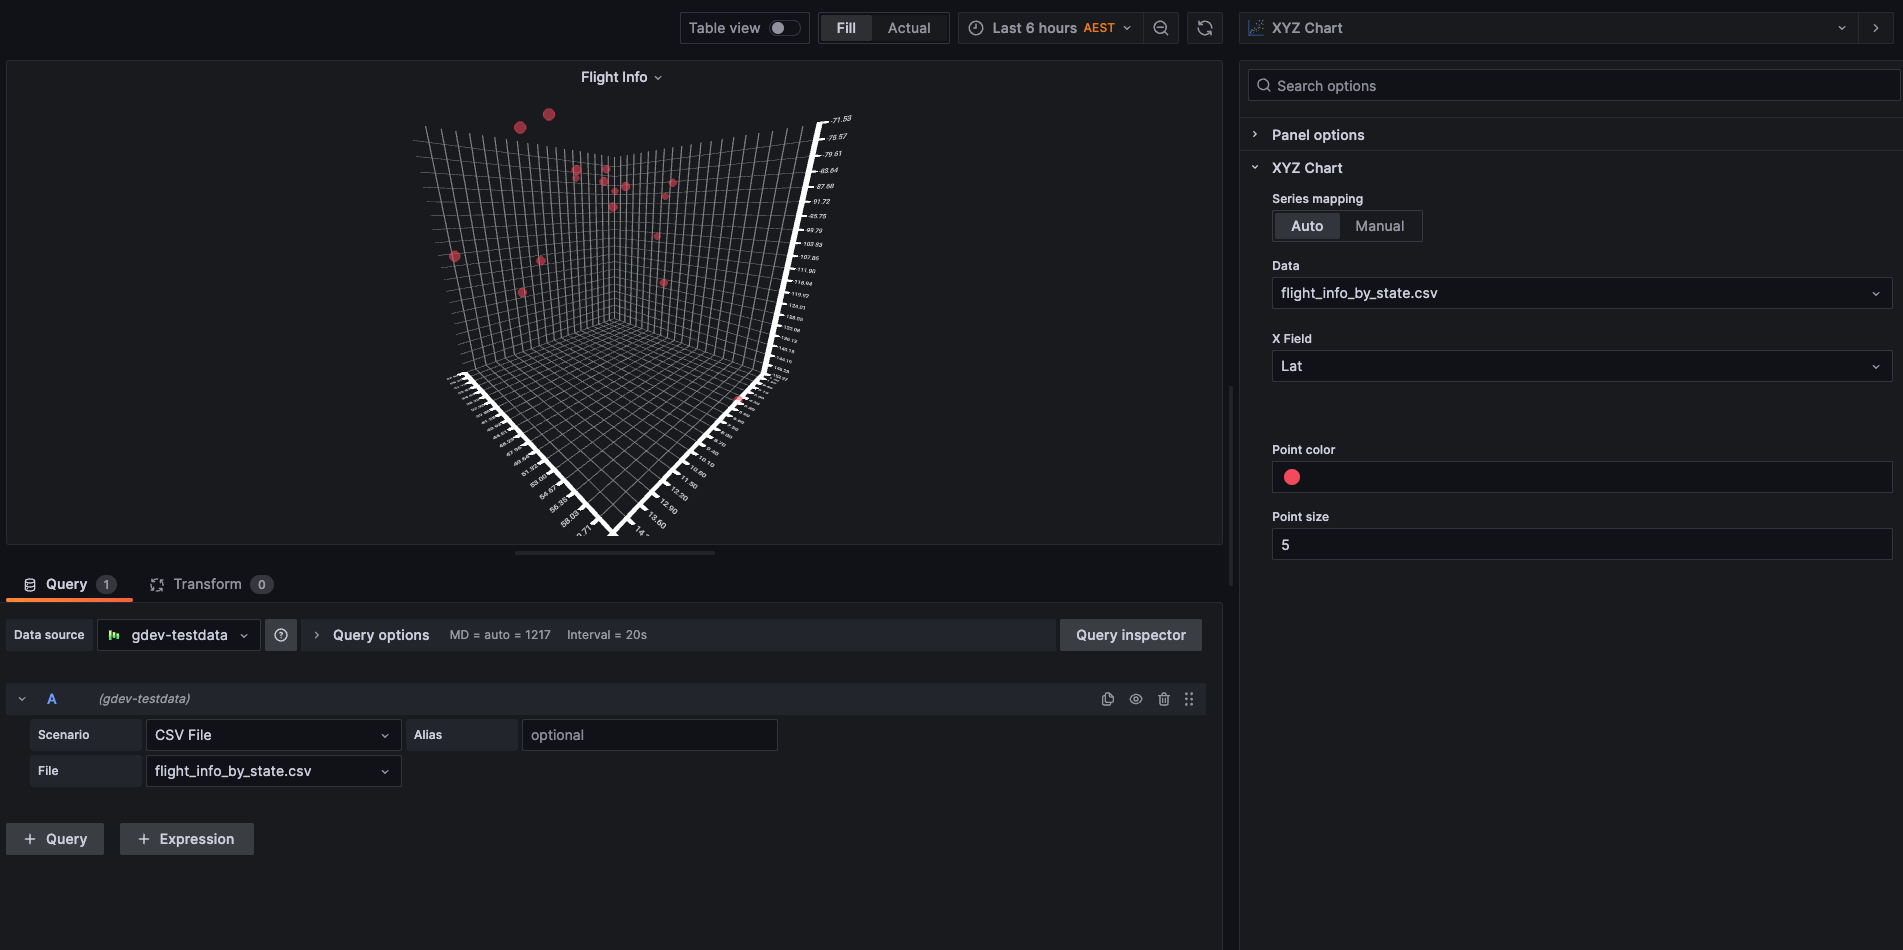 A screenshot of the XYZ chart in Auto mode.